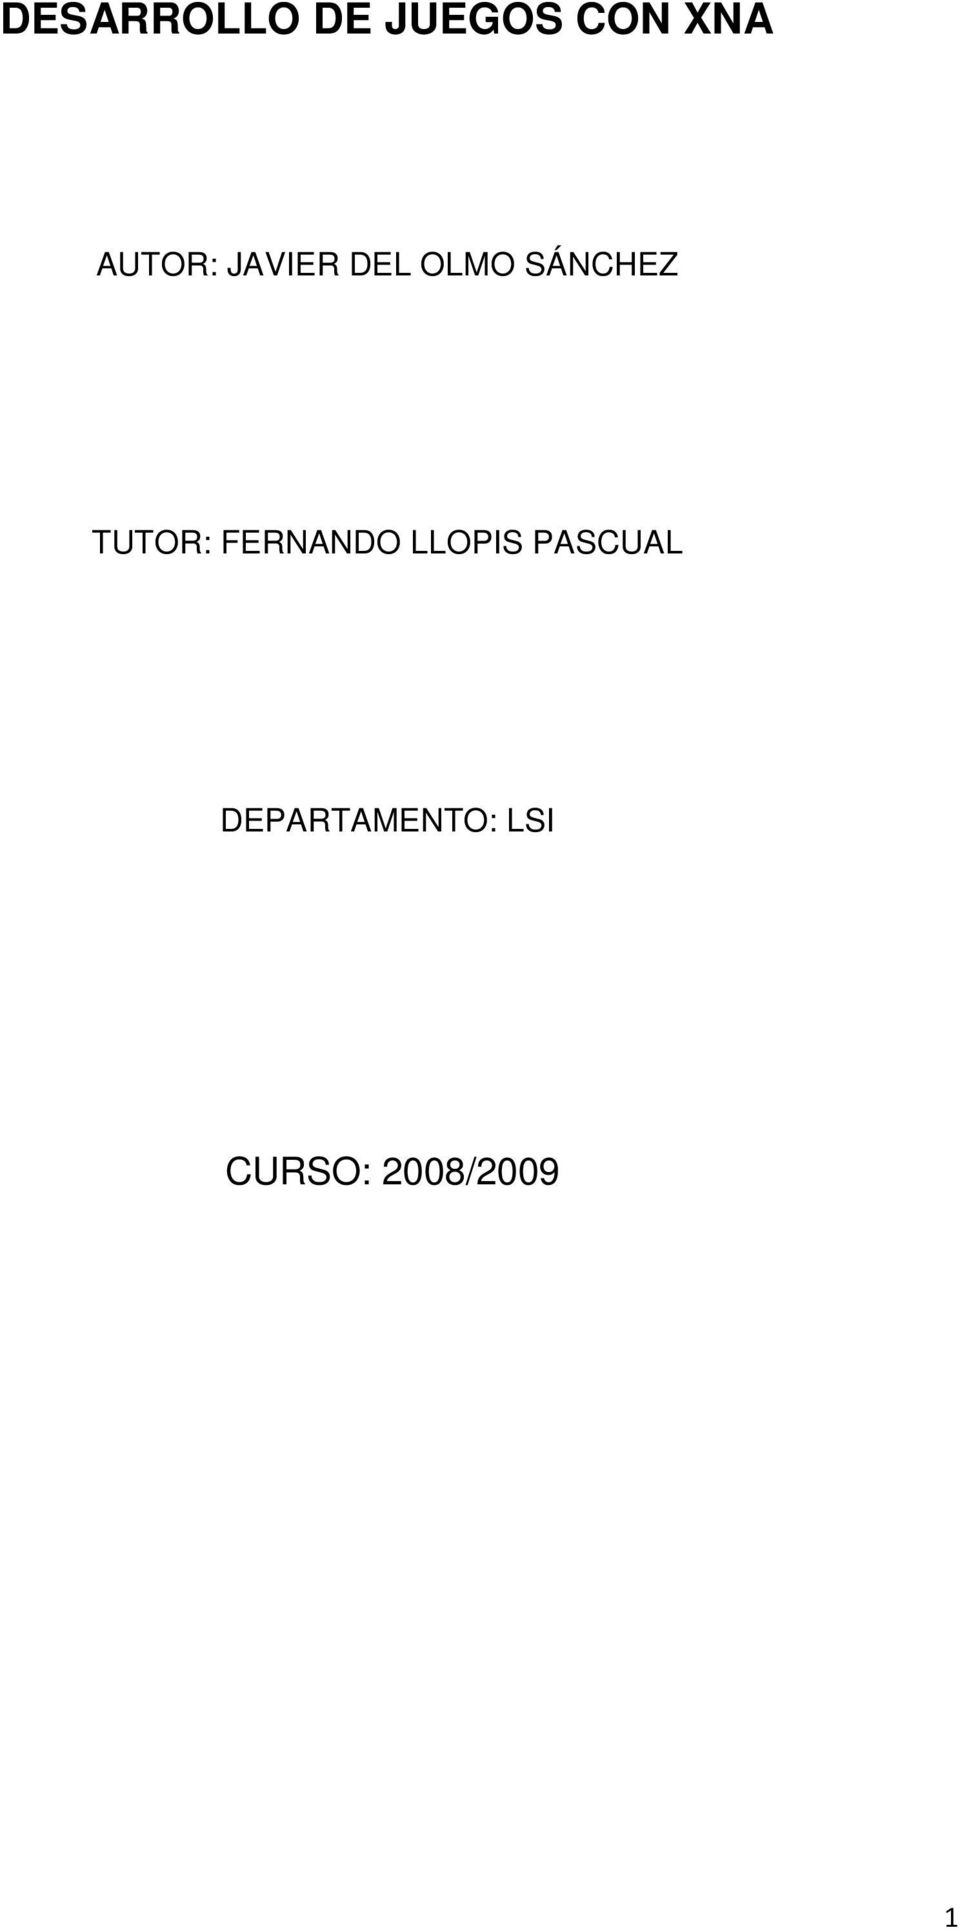 TUTOR: FERNANDO LLOPIS PASCUAL